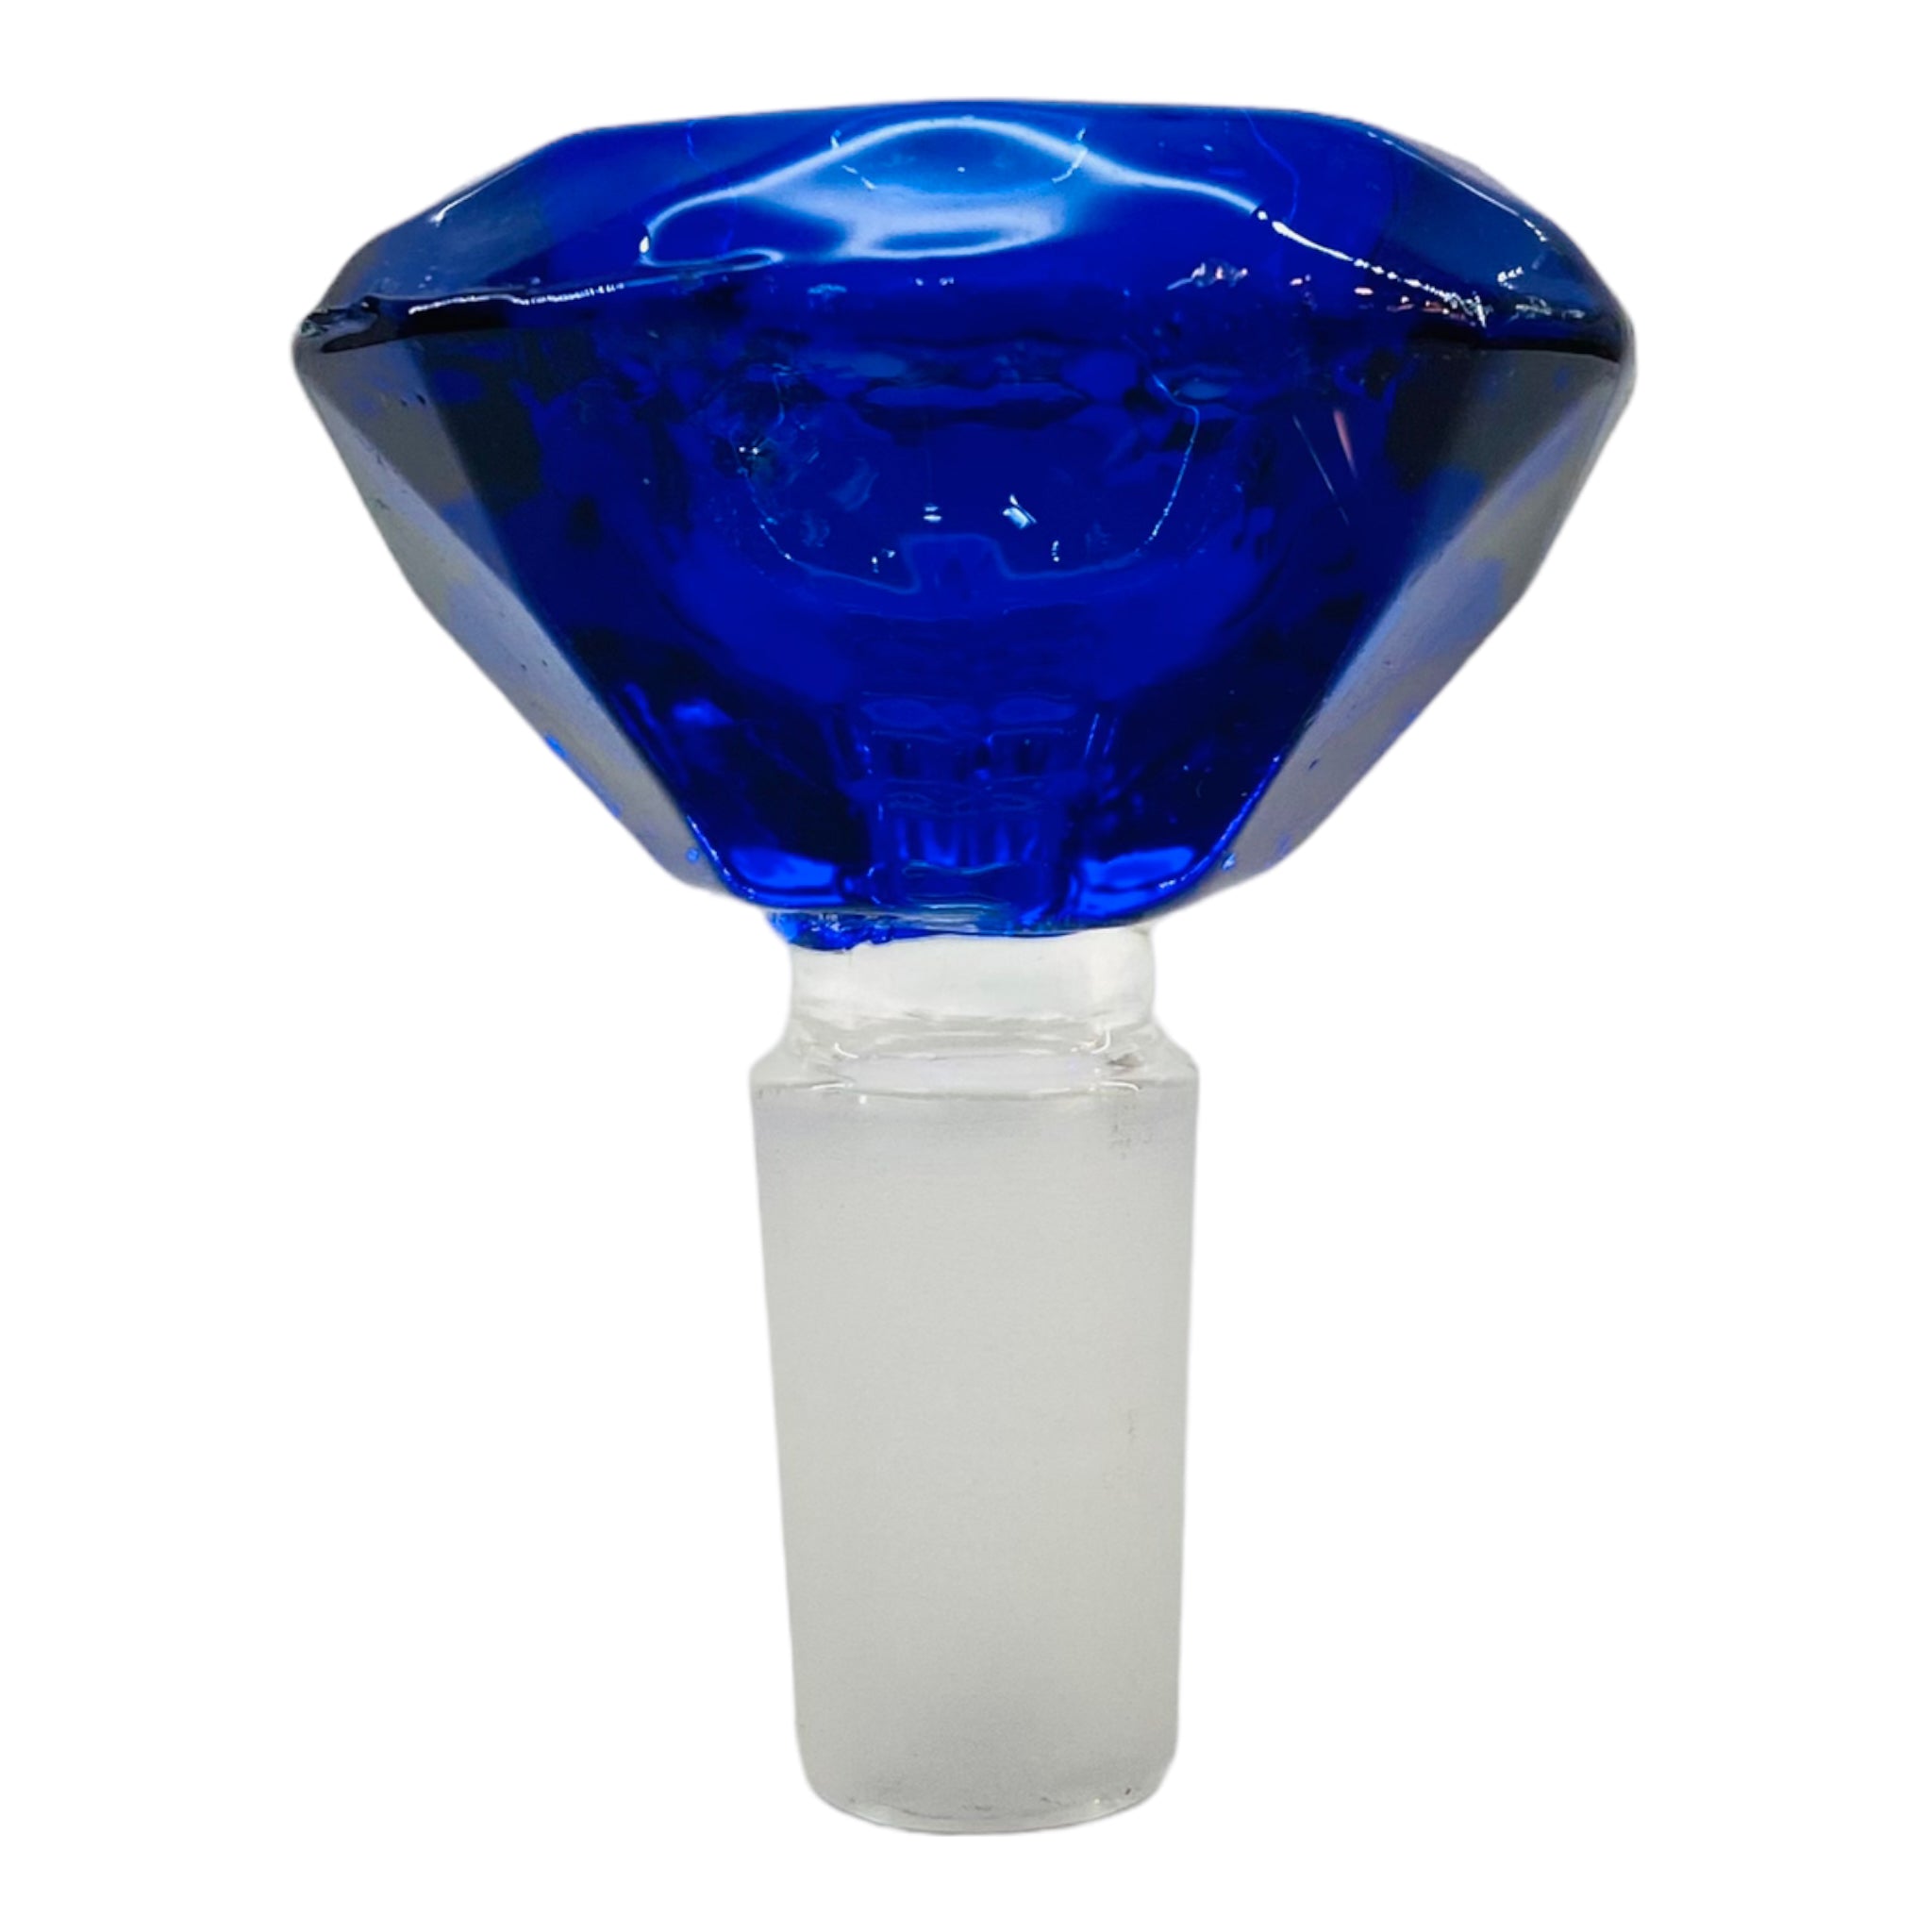 14mm Flower Bowl - Faceted Diamond Glass Bong Bowl Piece - Blue